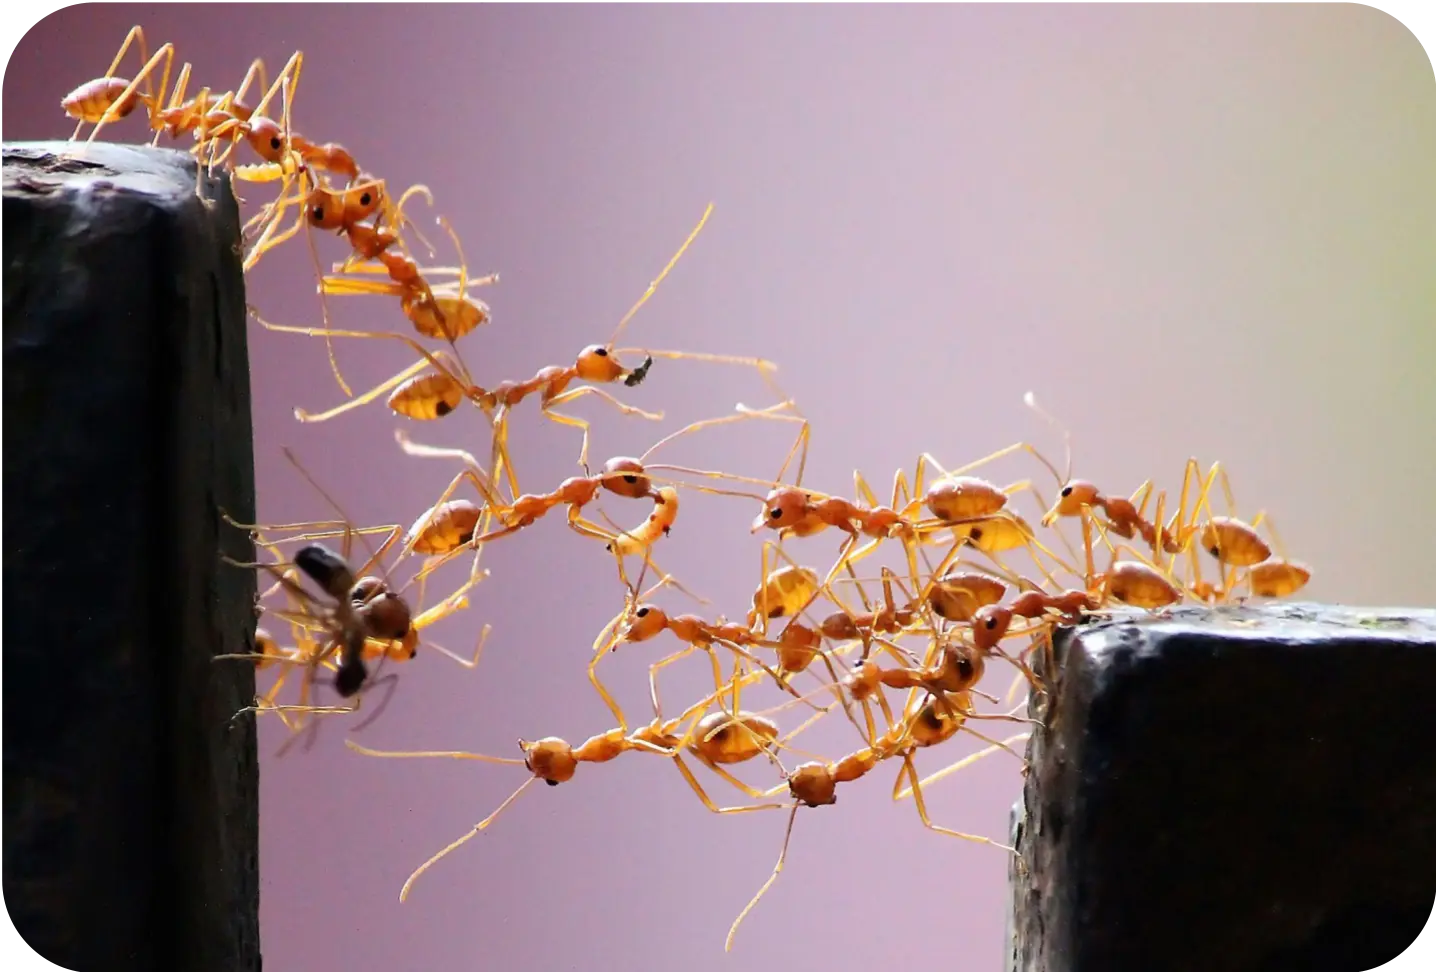 Ants building a bridge across a gap